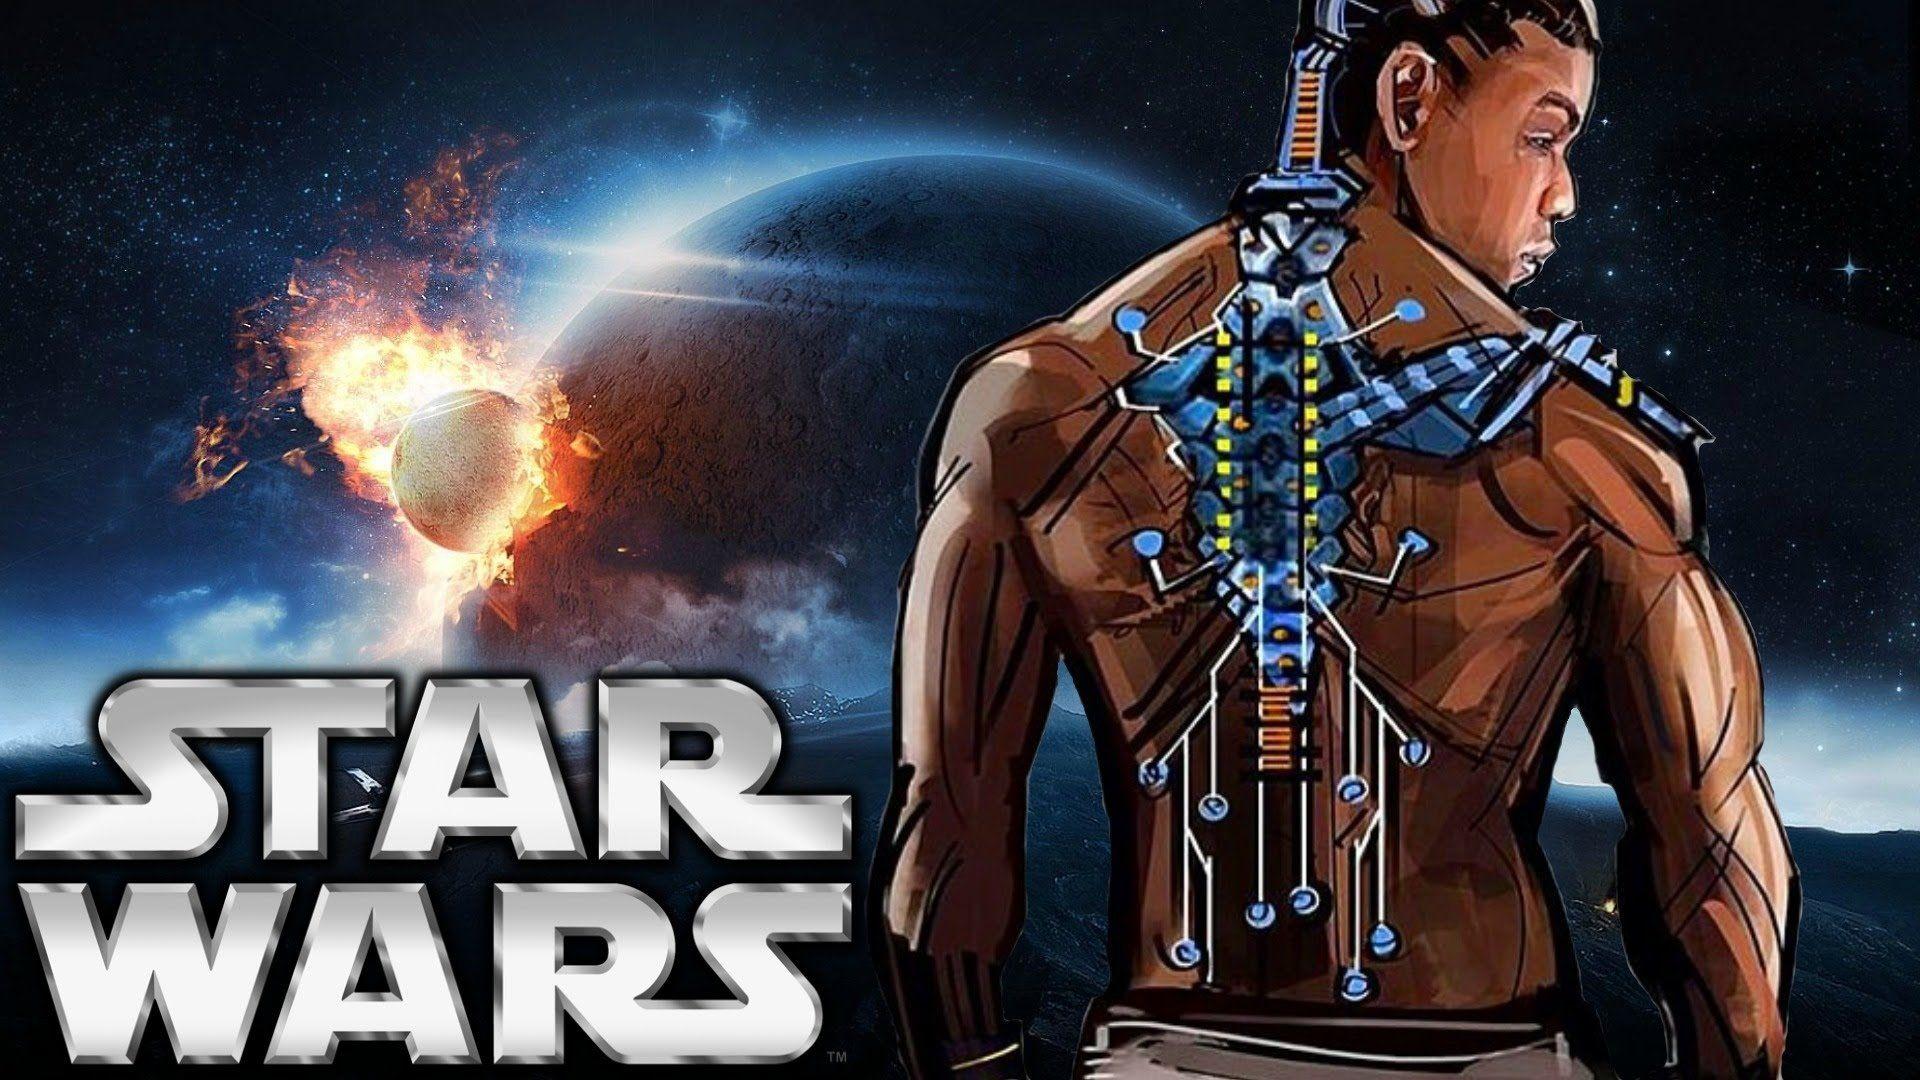 Star Wars Episode VIII: The Last Jedi Wallpaper Icon PNG